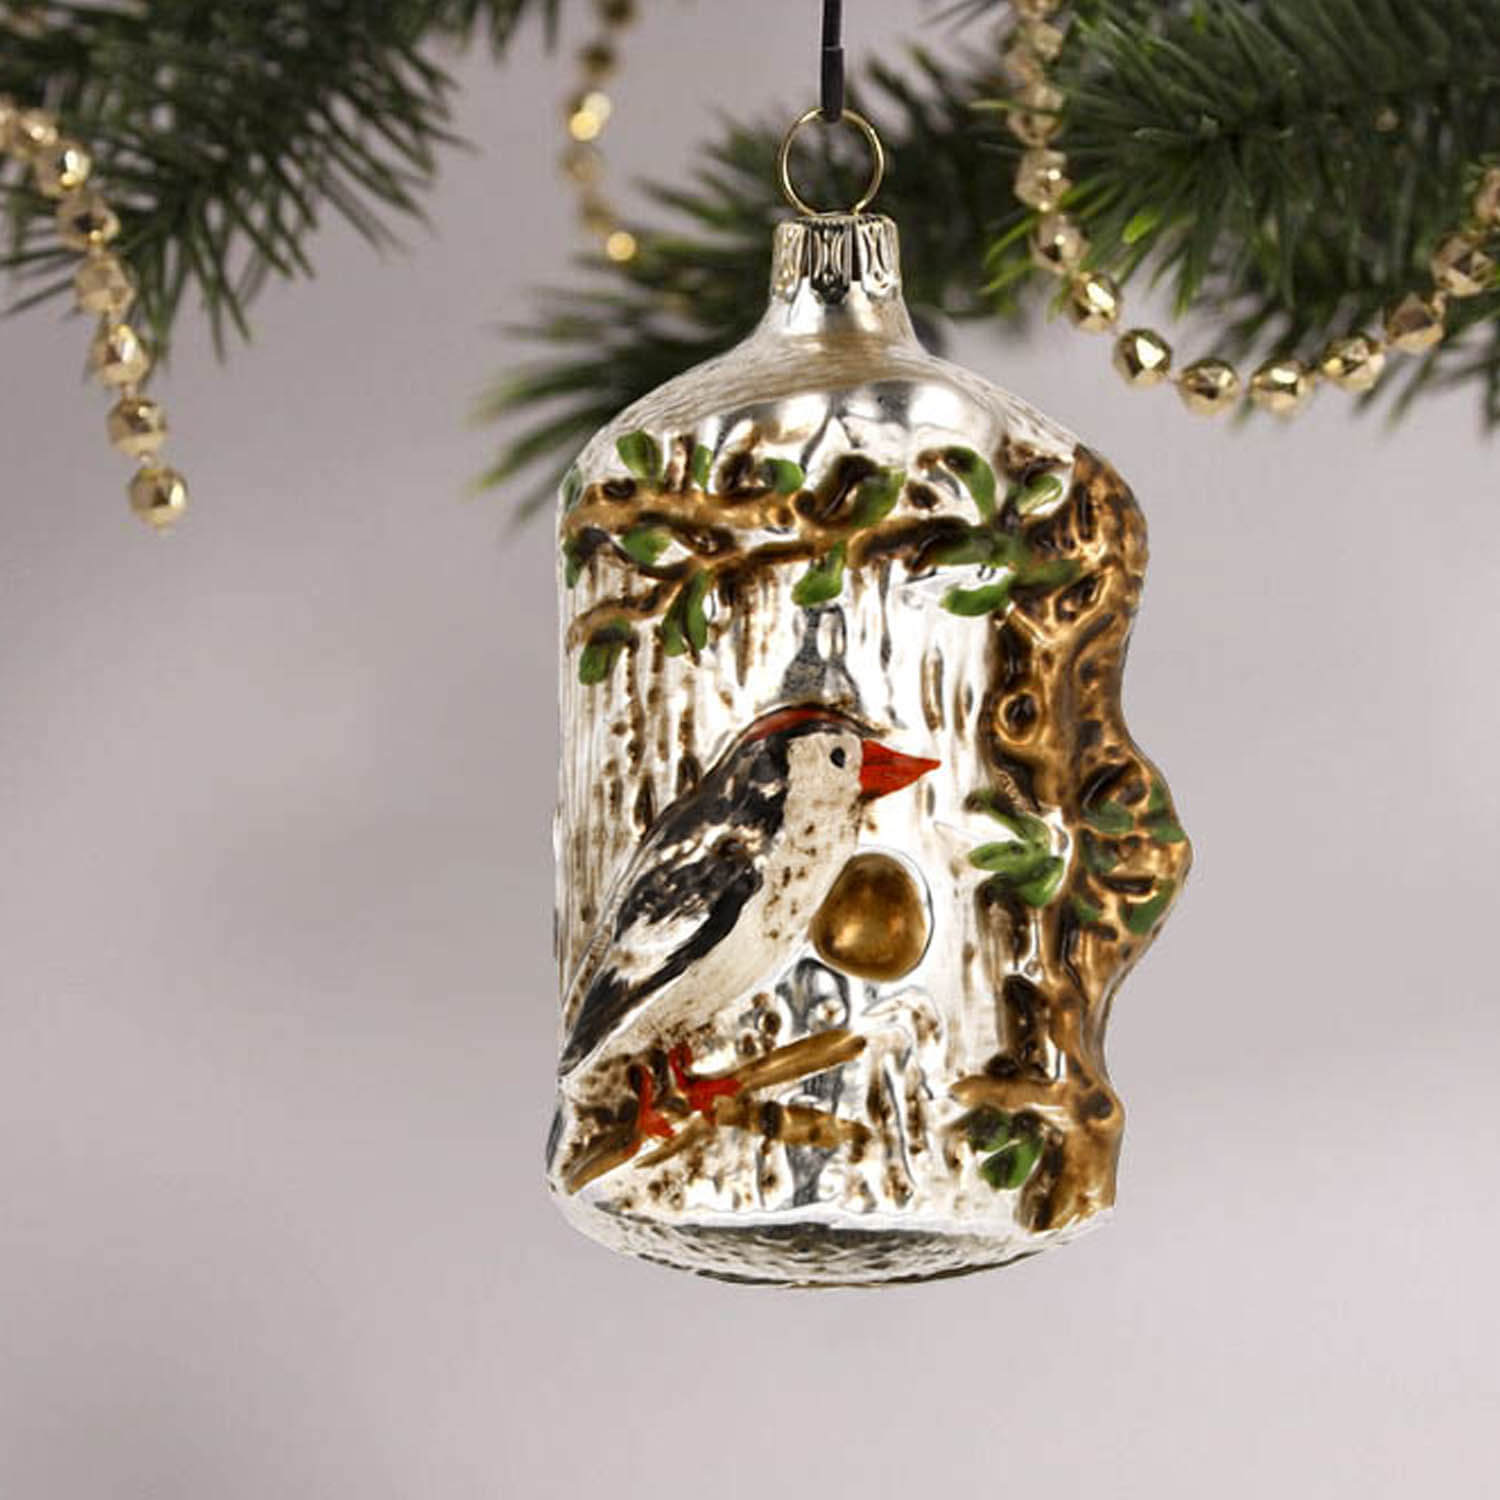 MAROLIN® - Glass ornament "Tree trunk with bird"